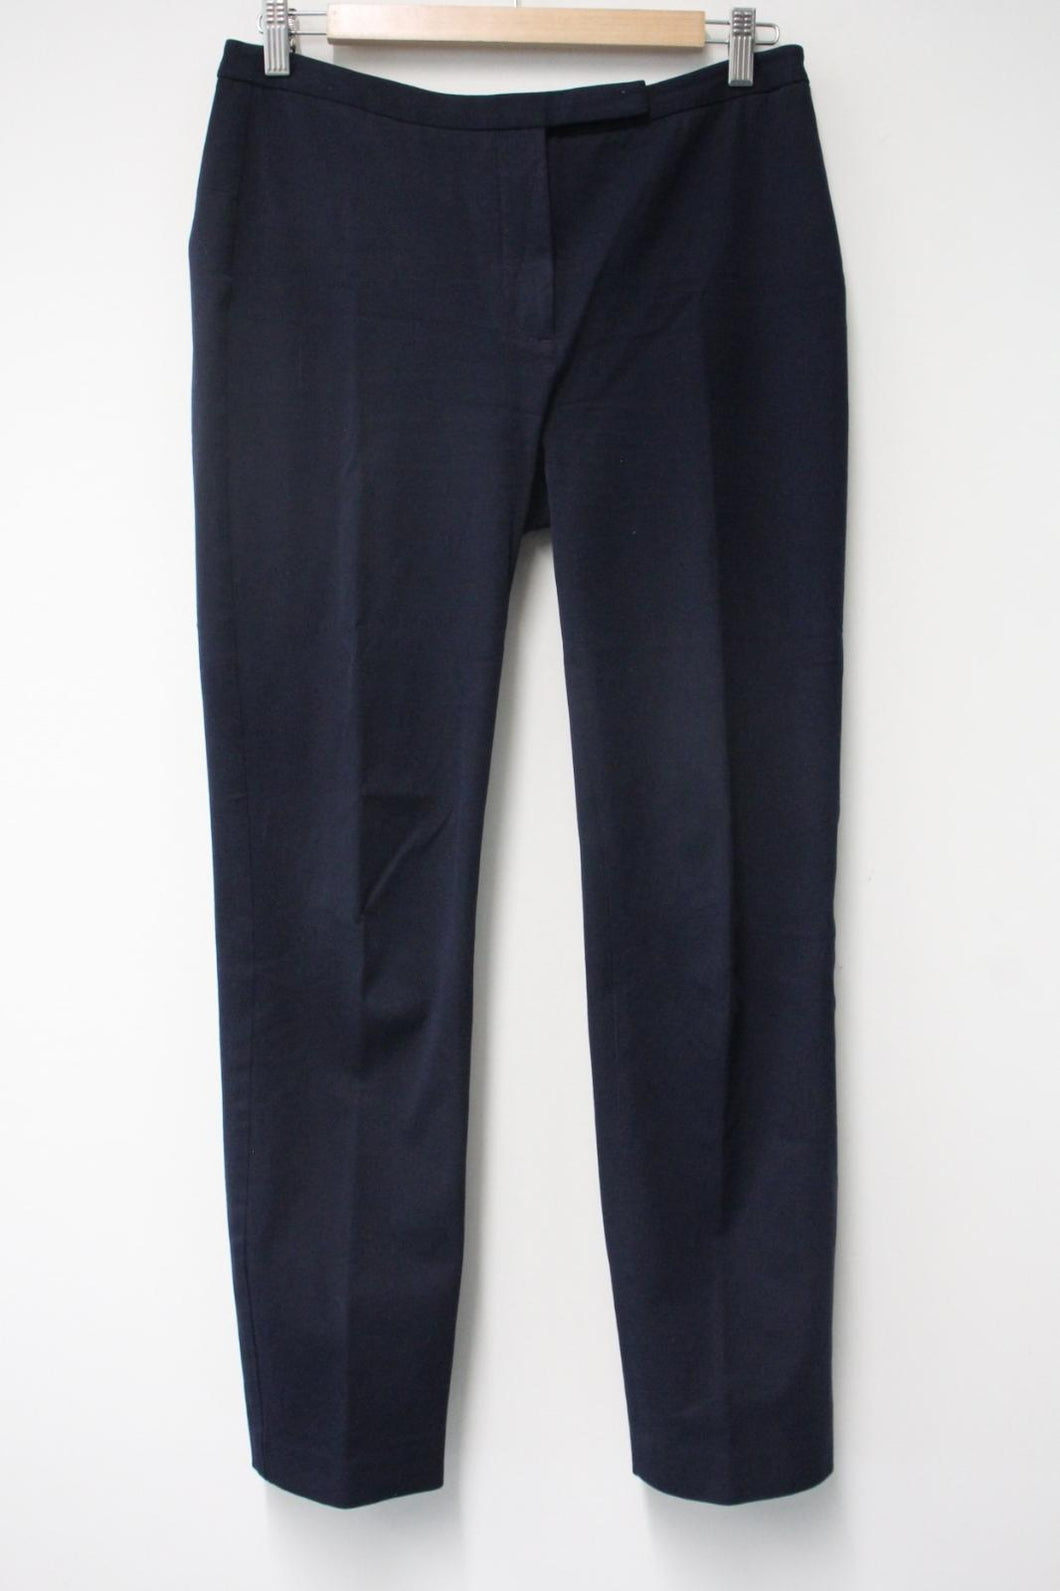 TALBOTS Ladies Navy Blue Cotton Blend Slim Fit Newport Trousers US4 UK8